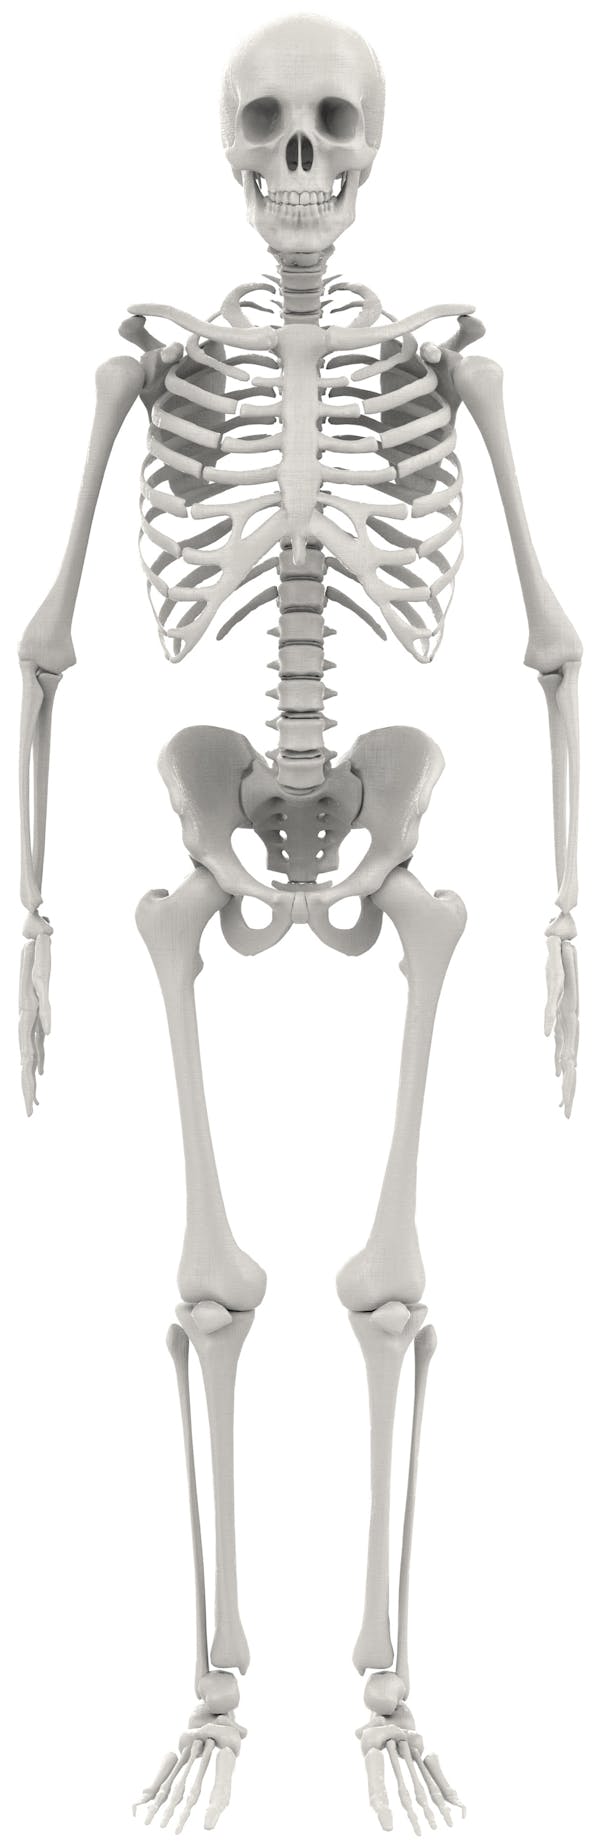 human skeleton orthopedic diagram